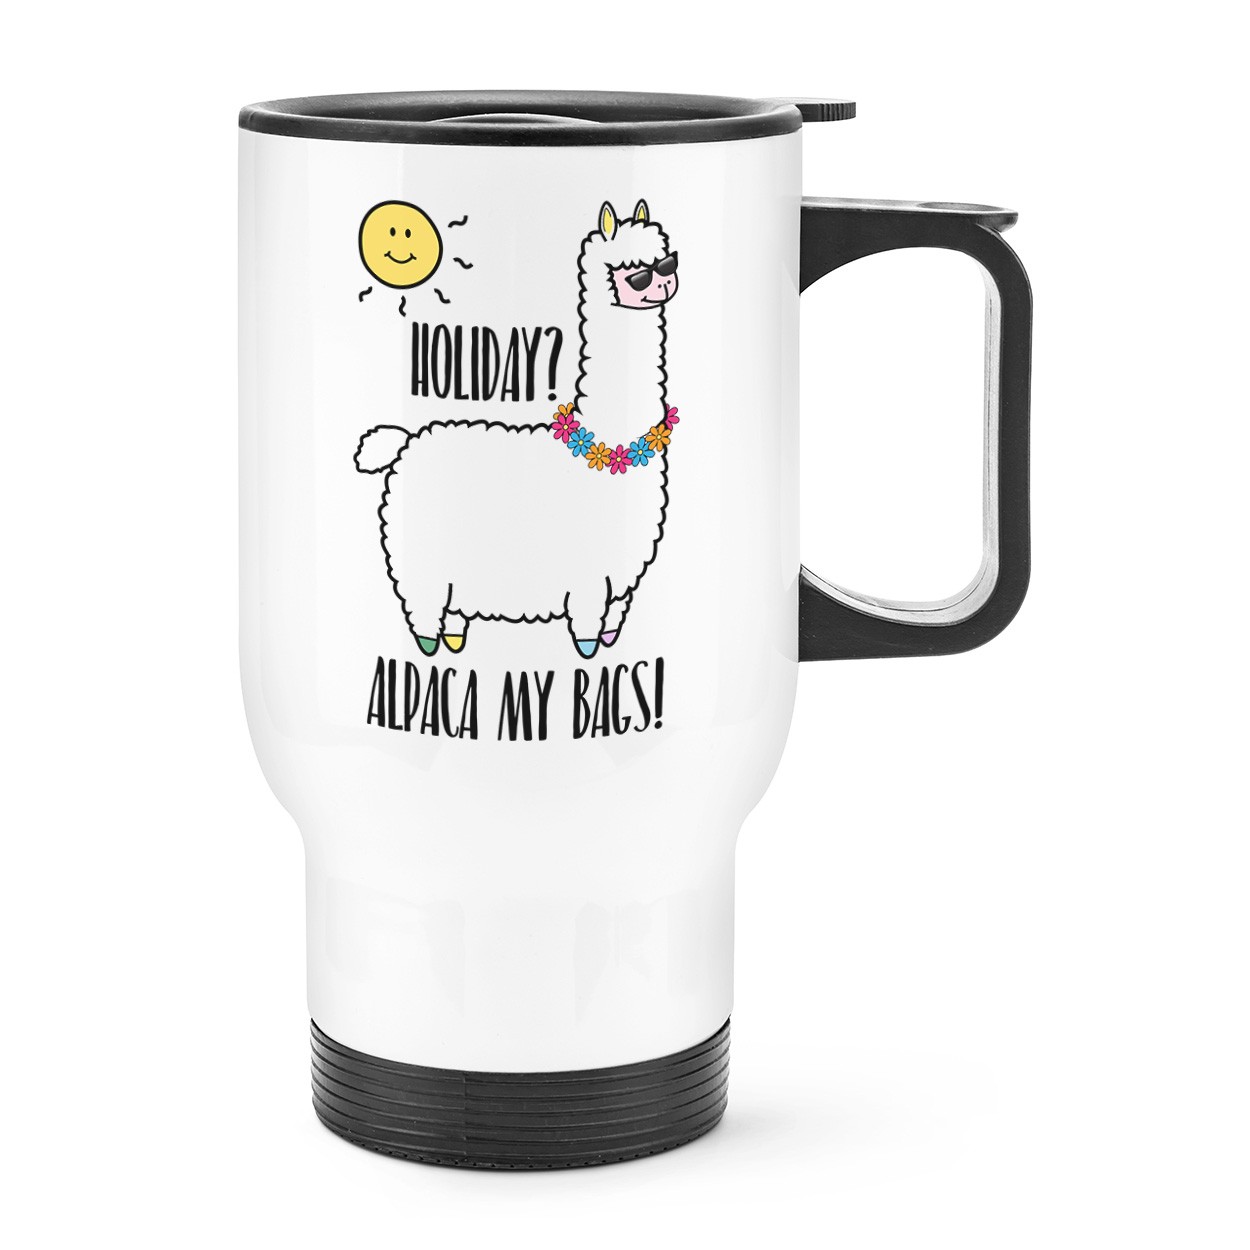 Holiday Alpaca My Bags Travel Mug Cup With Handle